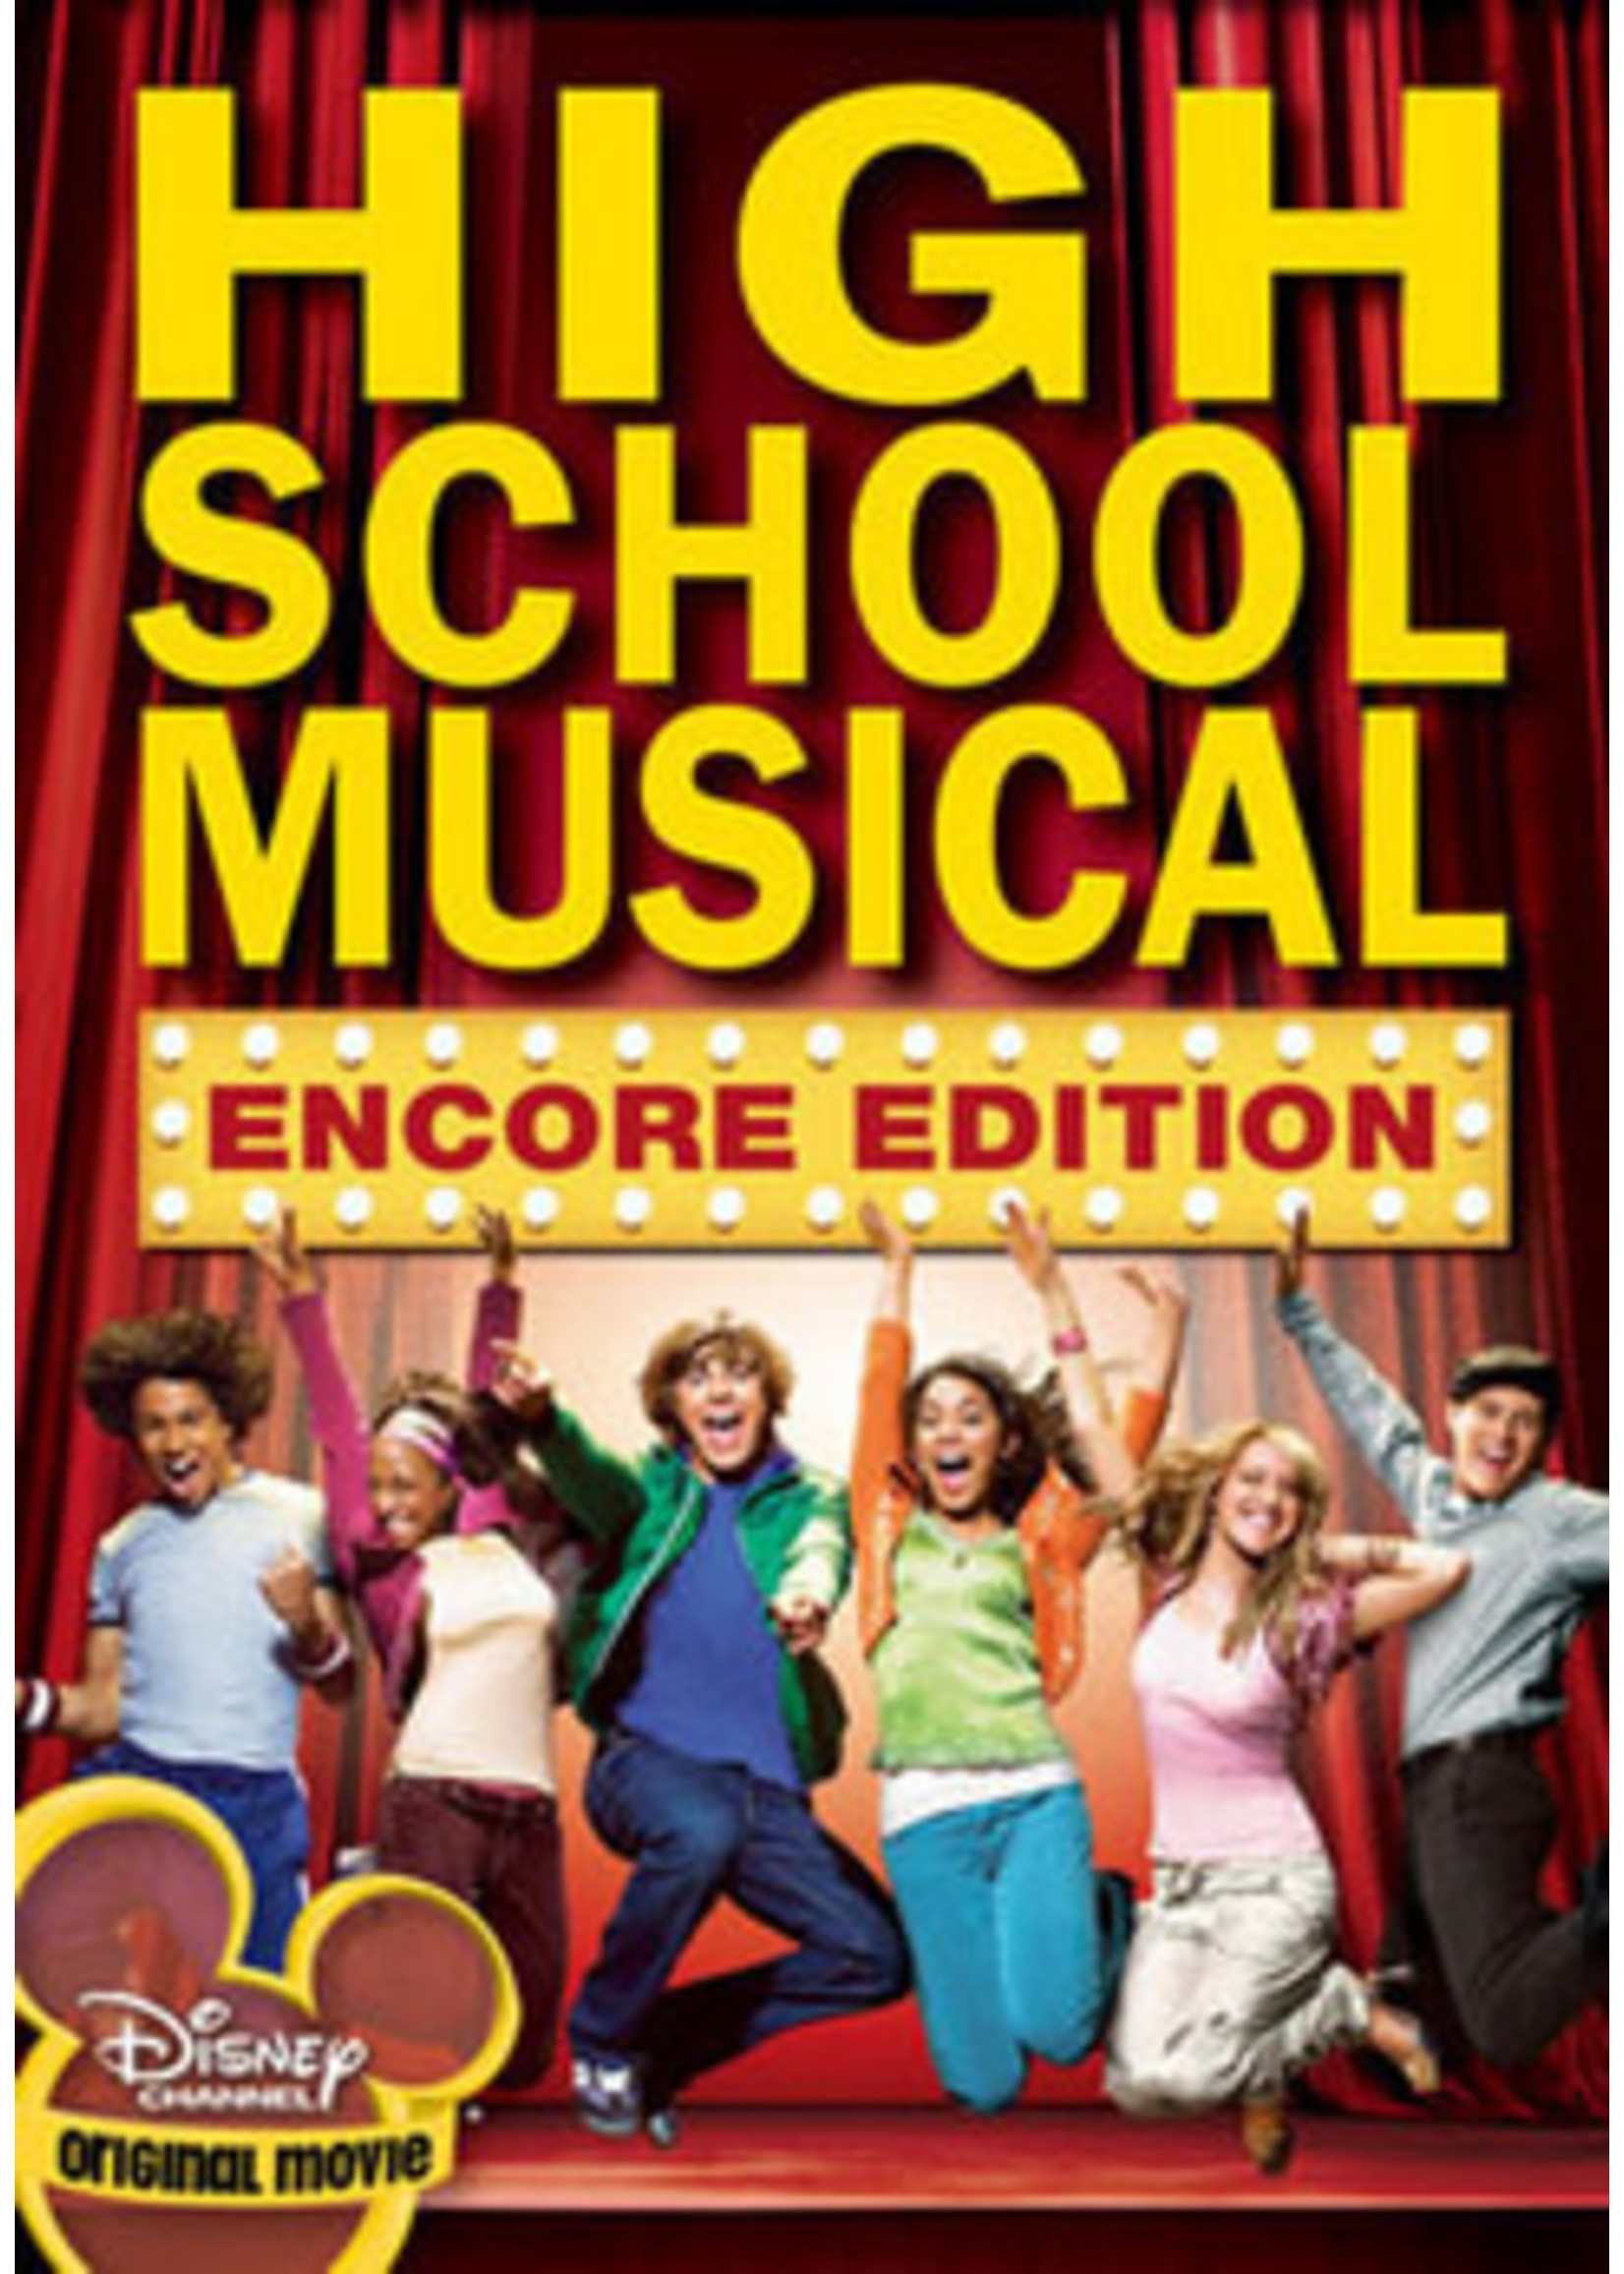 High School Musical (Encore Edition) (DVD)